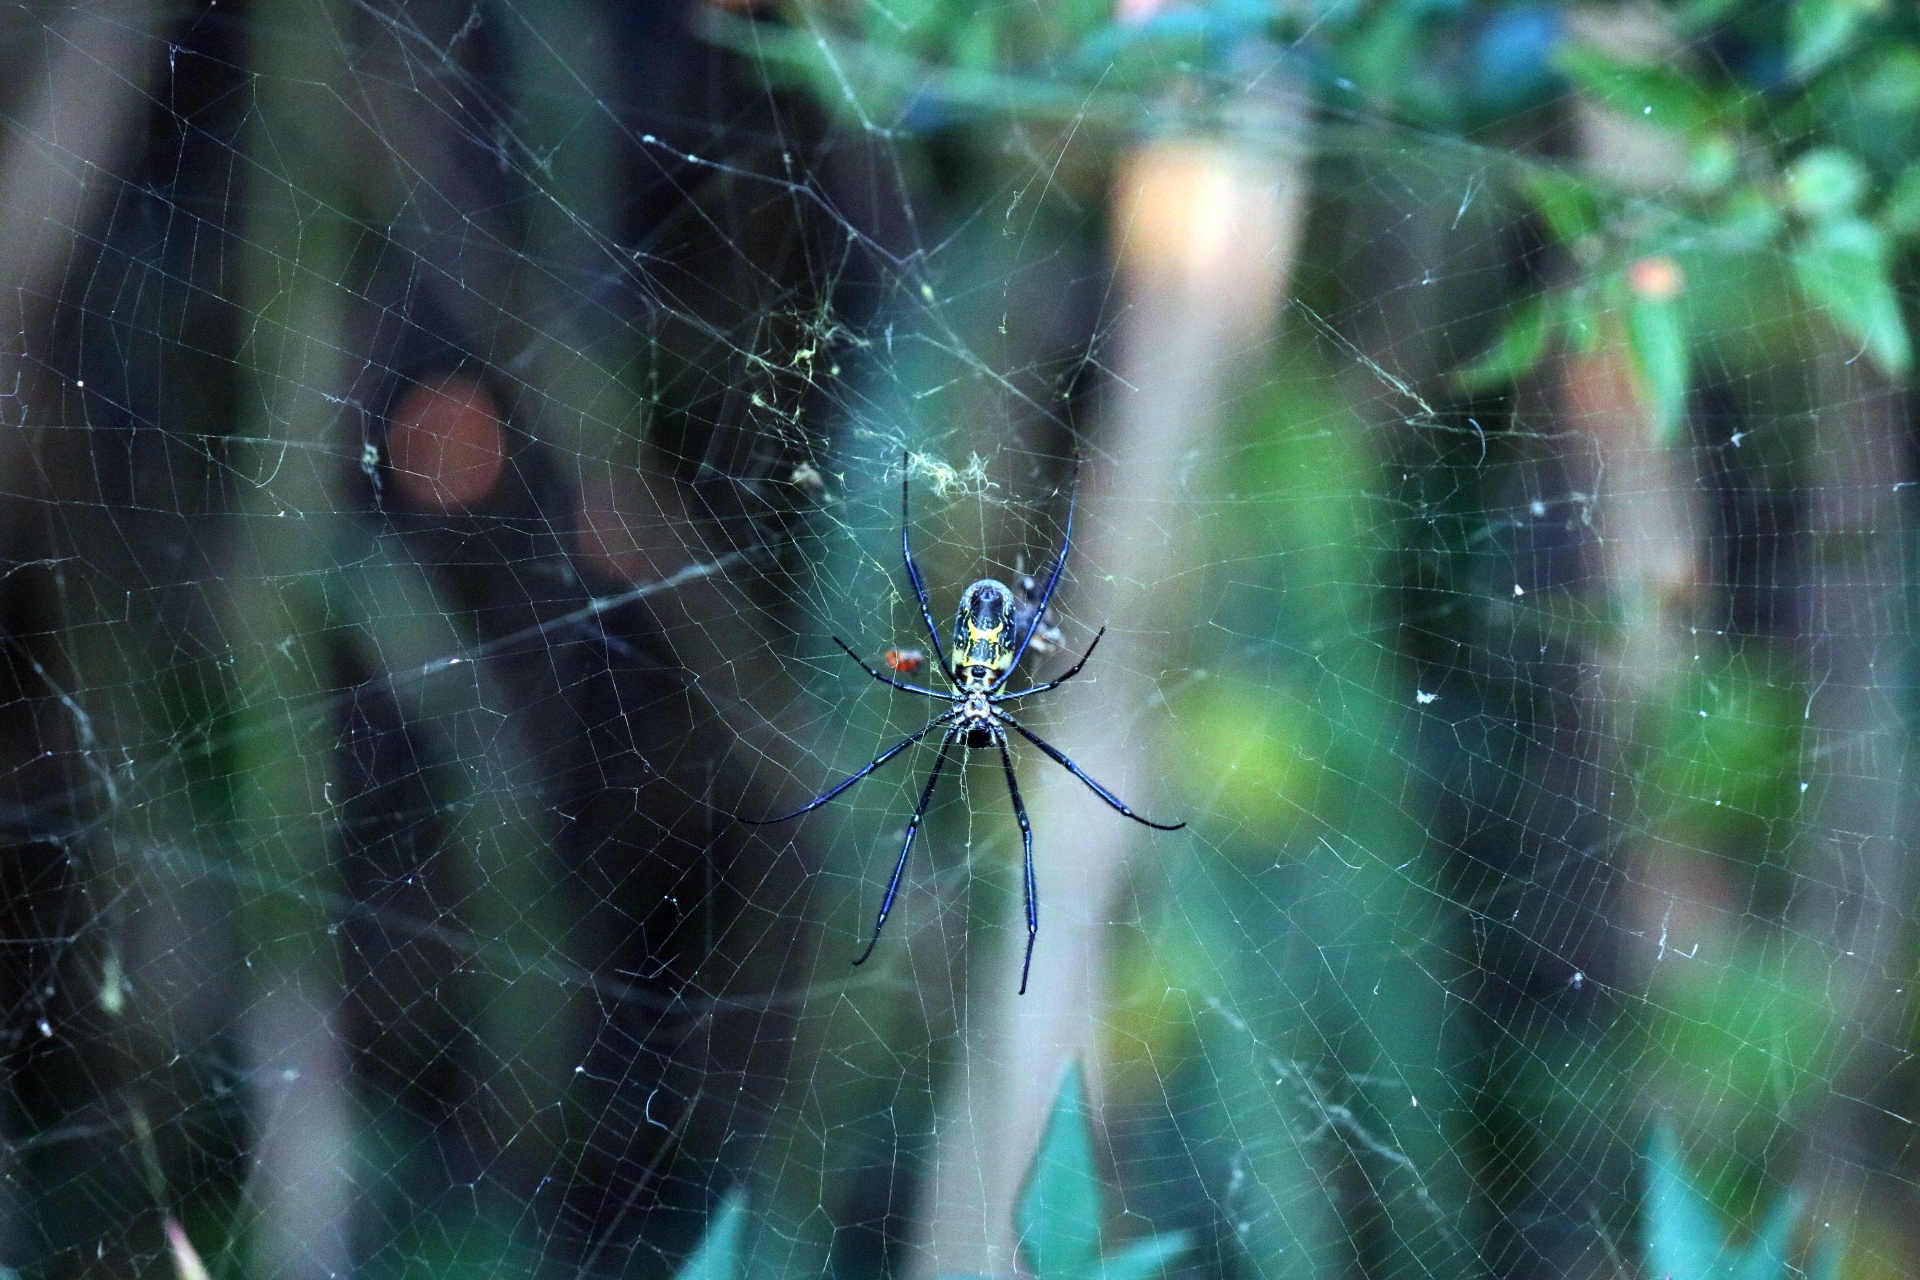 Golden Orb Weaver Spider On Her Web